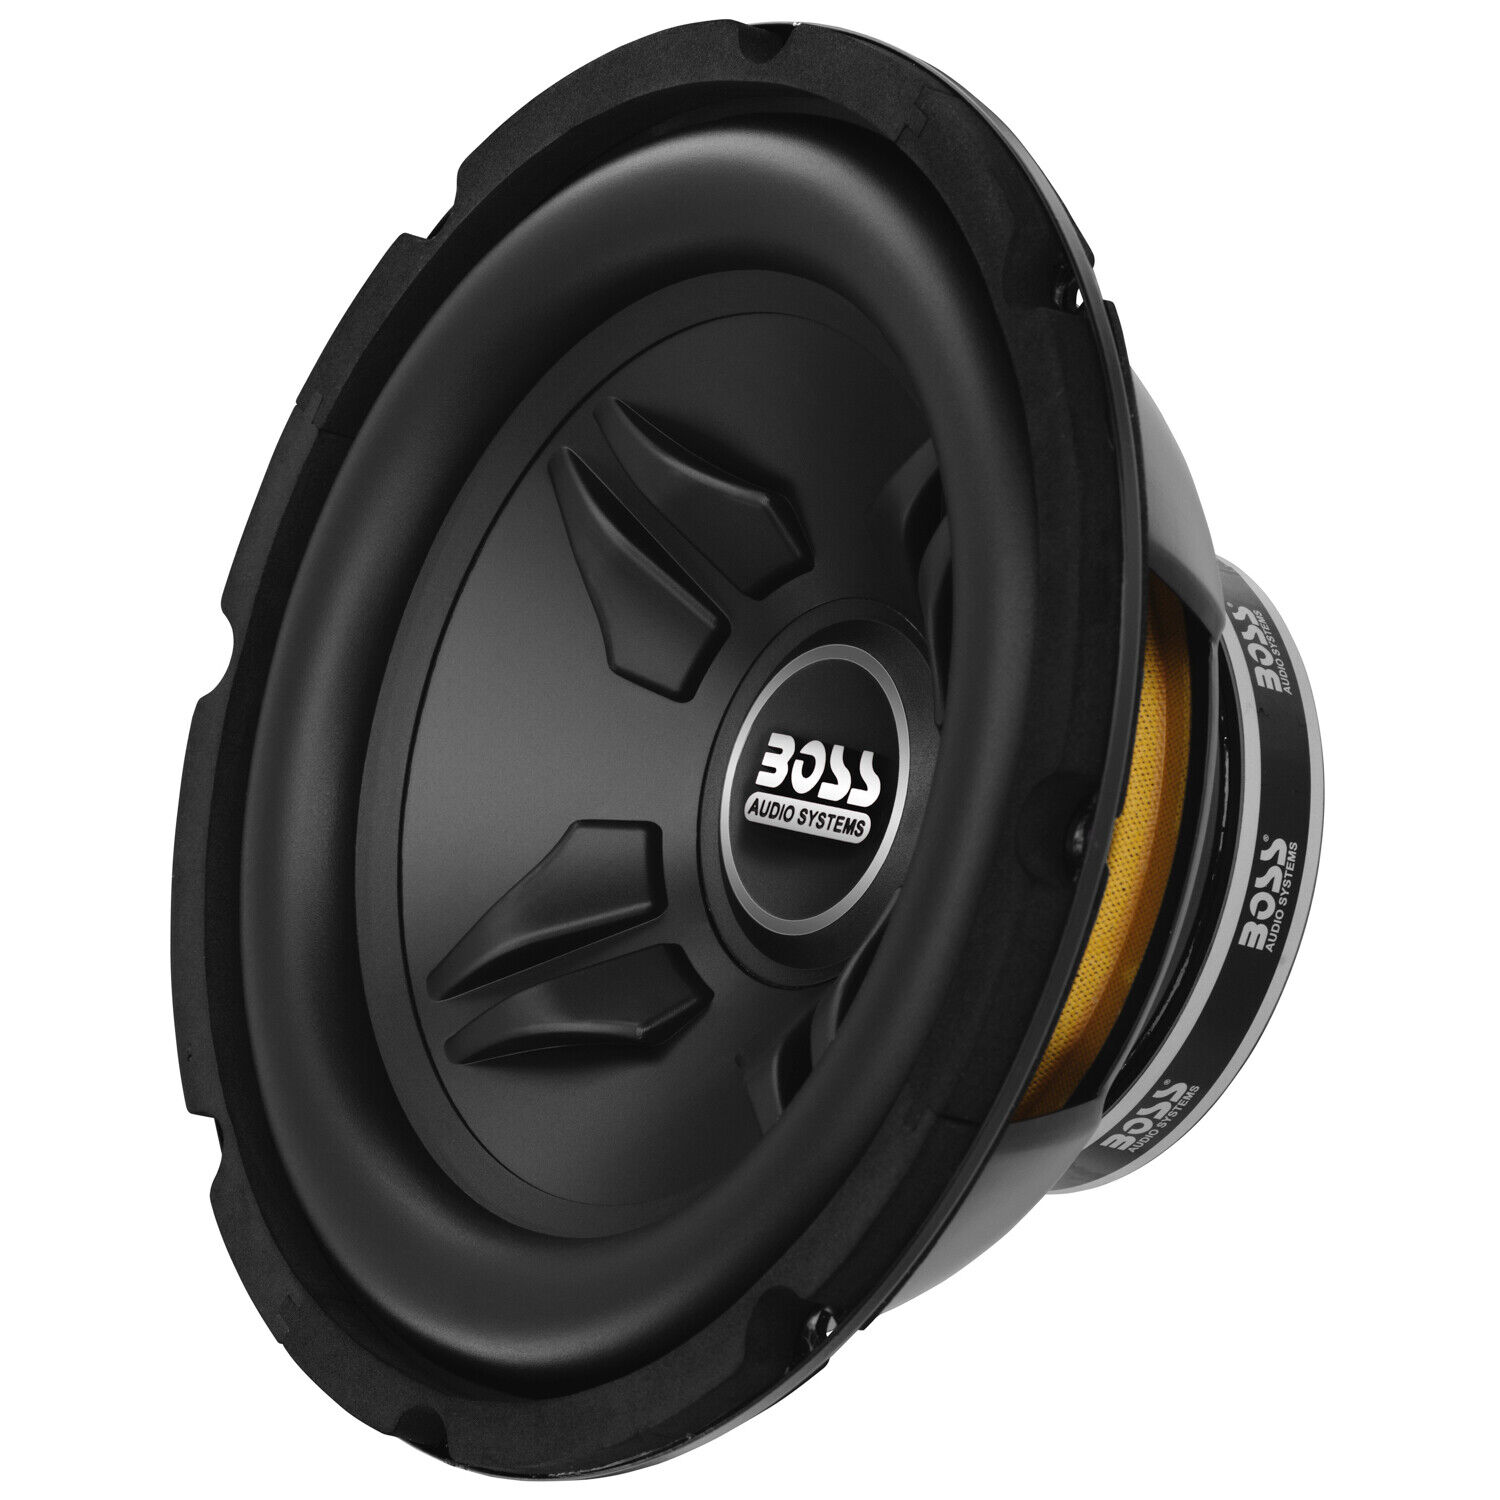 BOSS Audio Systems CXX10 10” Car Subwoofer - 800 W, Single 4 Ohm Voice Coil